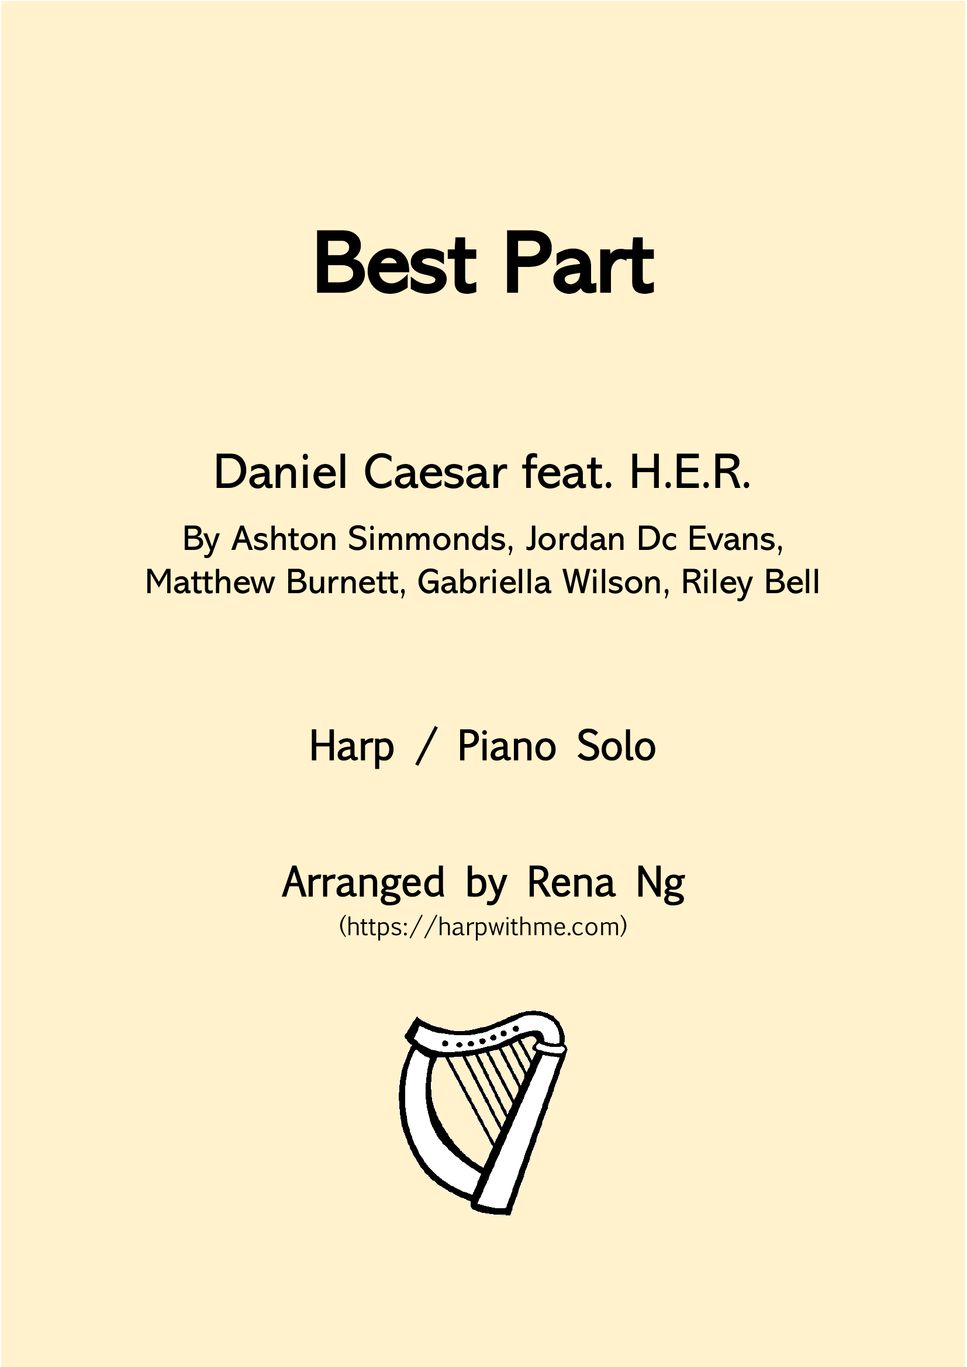 Daniel Caesar ft. H.E.R. - Best Part (Harp / Piano Solo) - Intermediate by Harp With Me